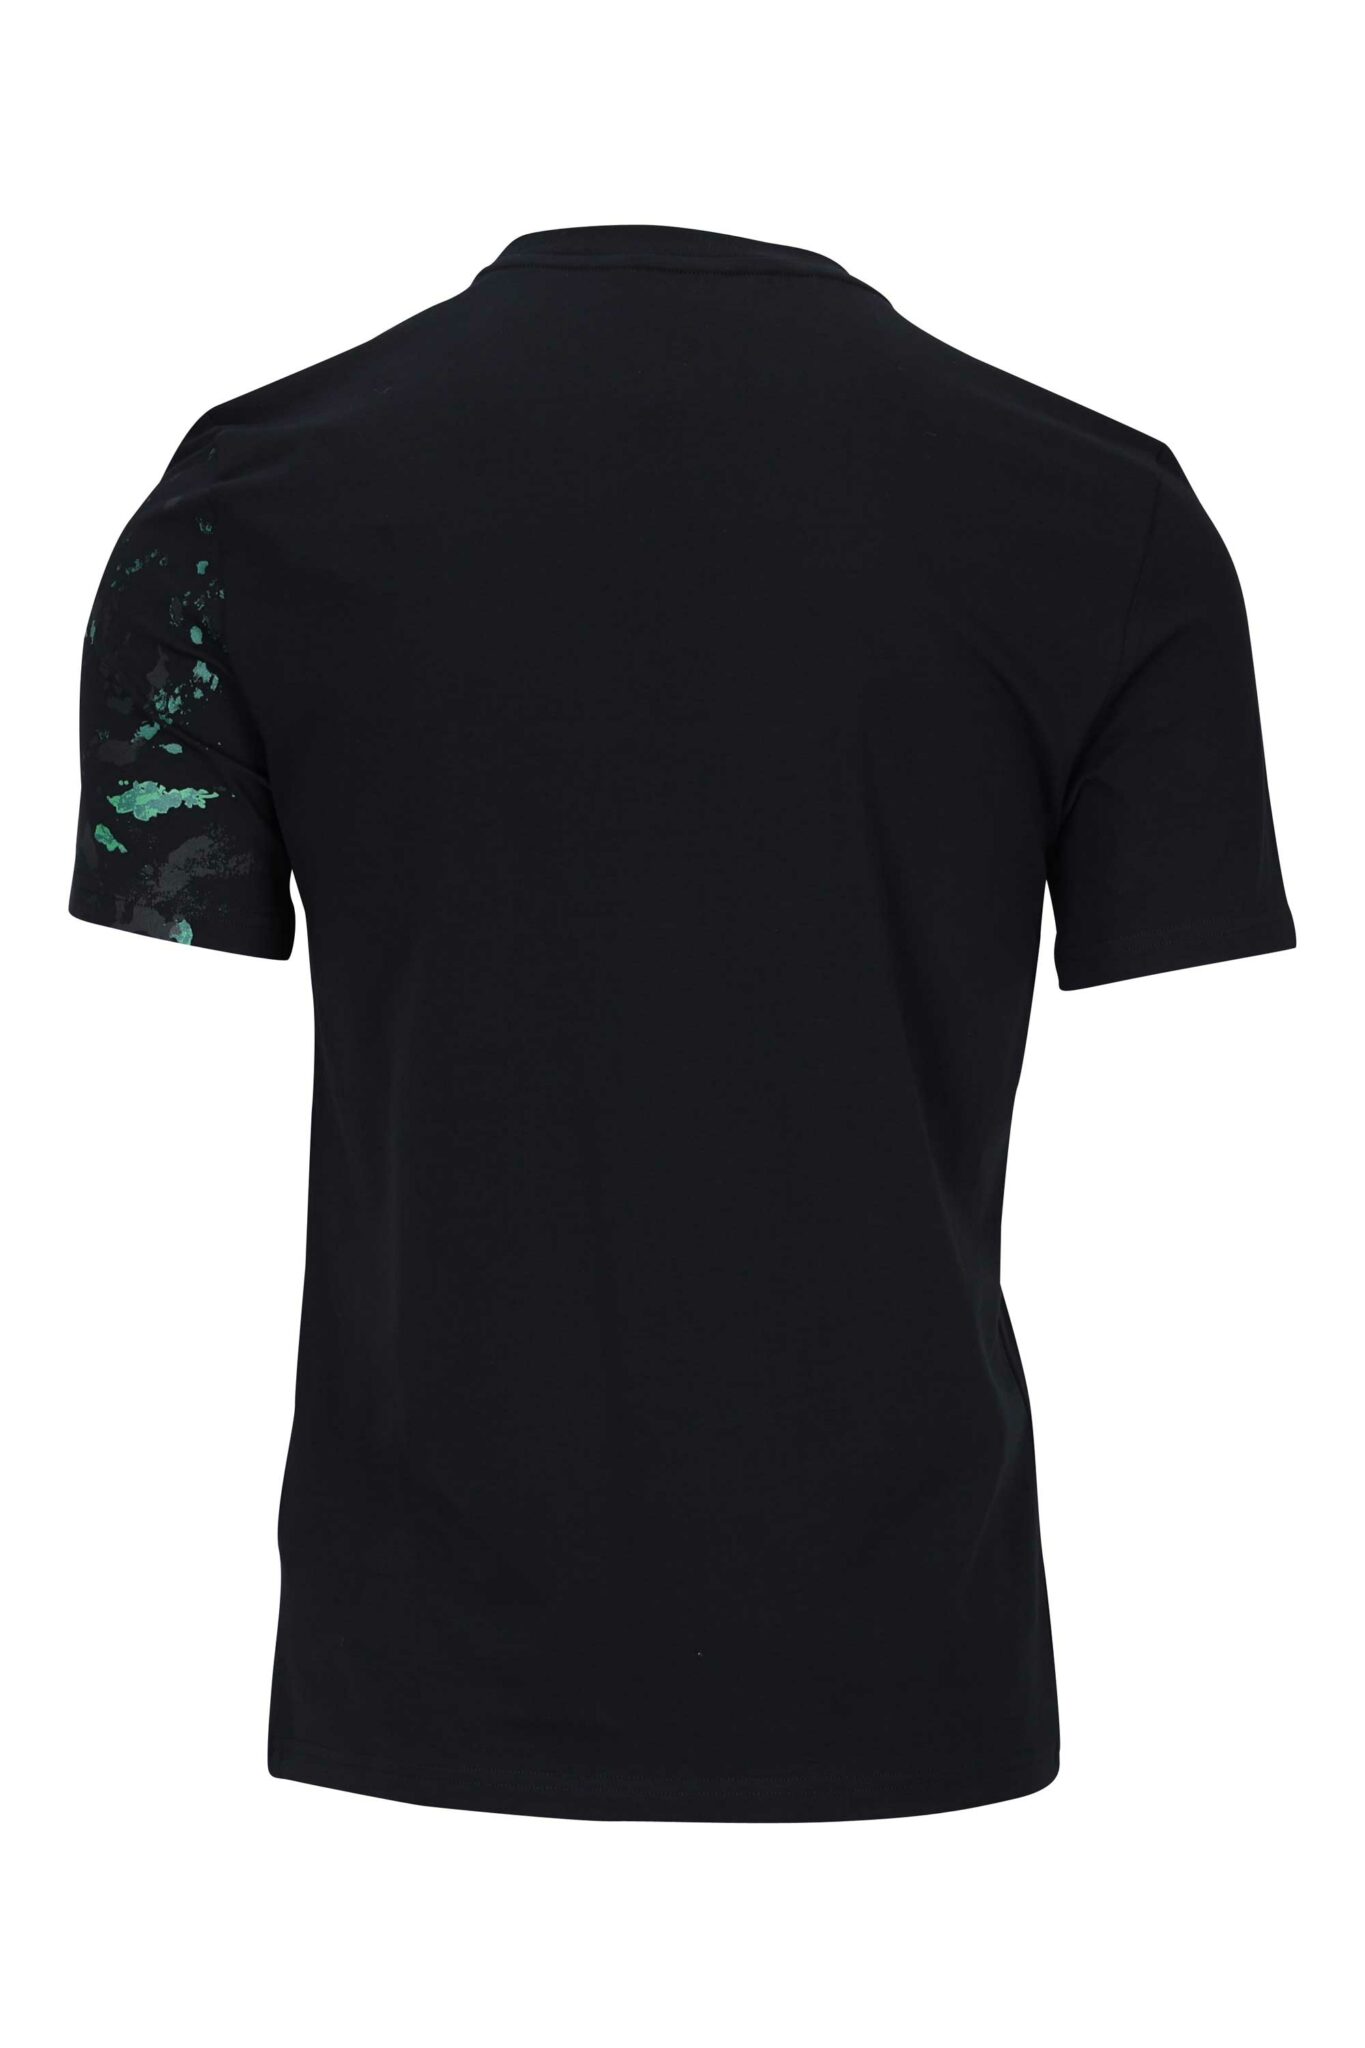 Moschino - Camiseta negra con minilogo